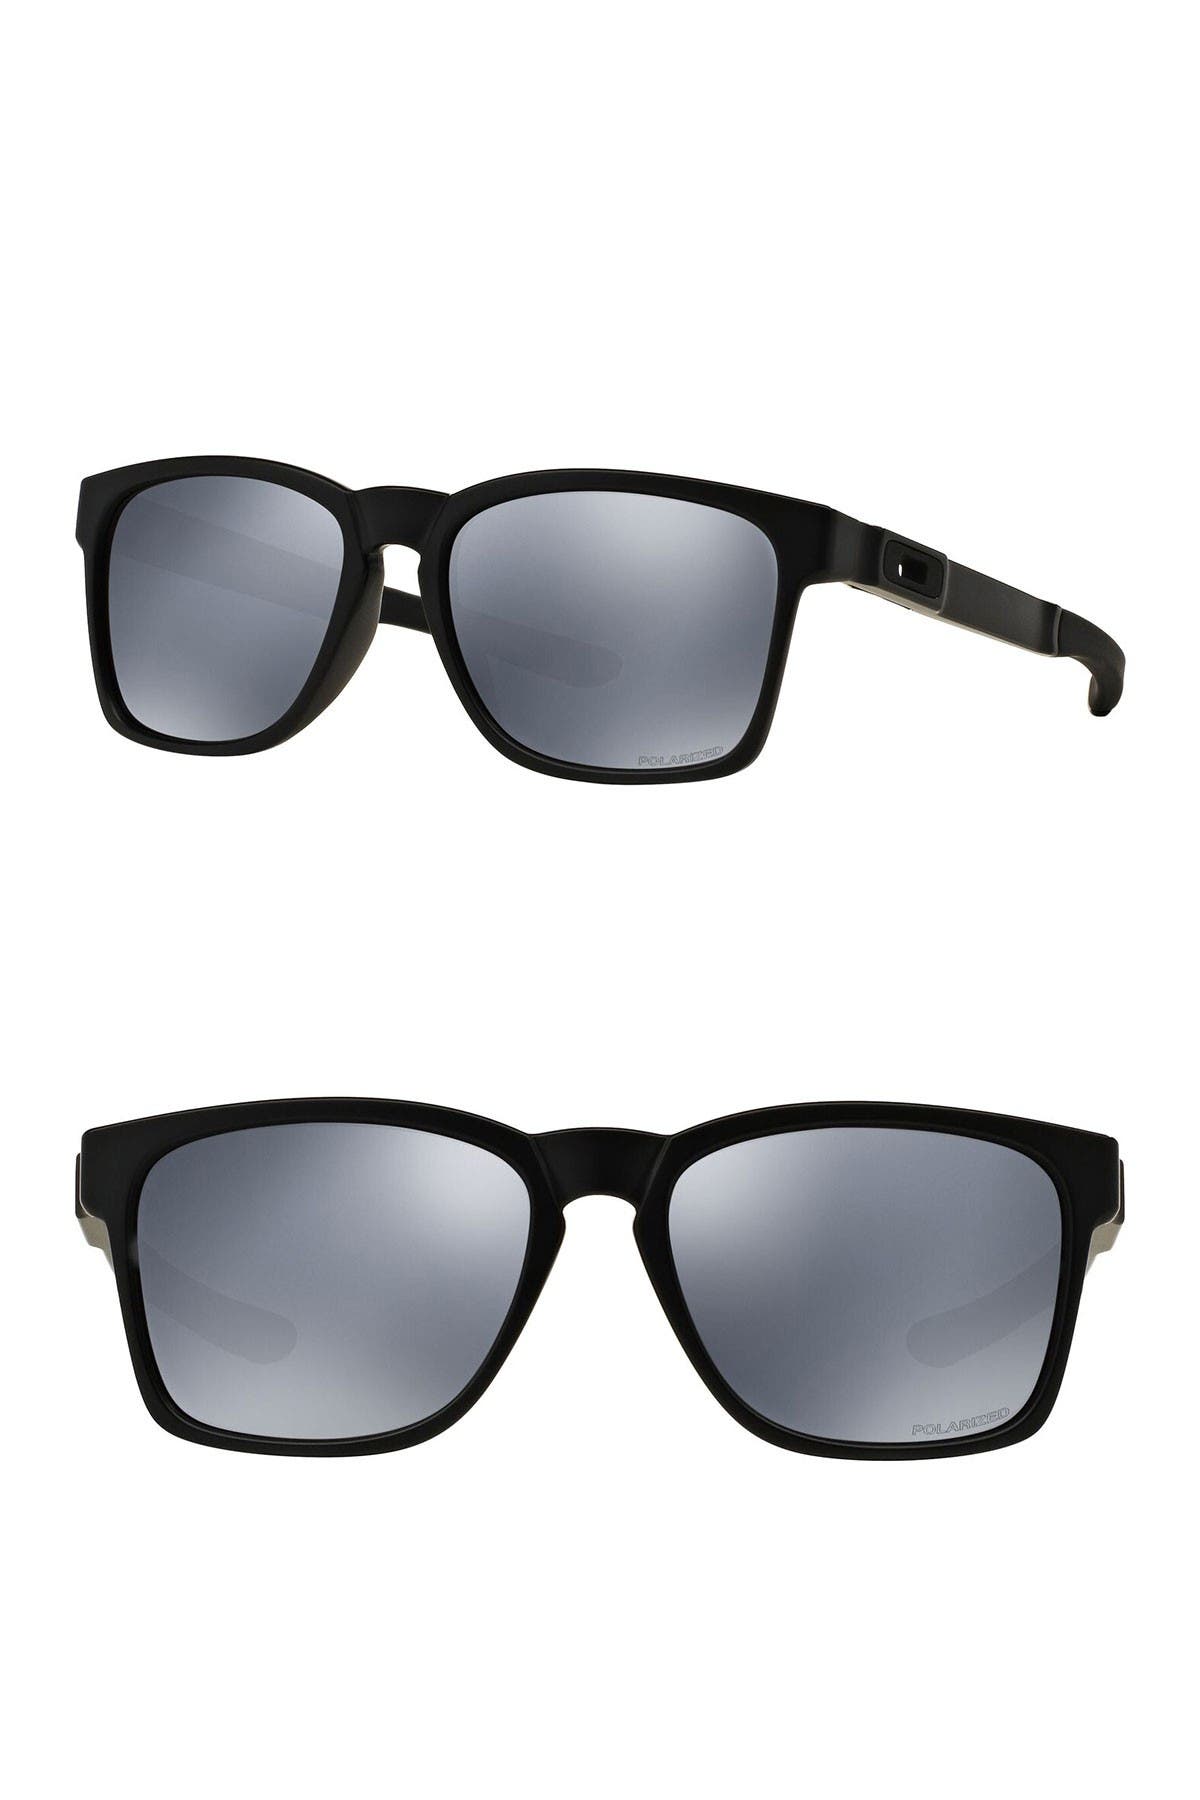 oakley rectangle sunglasses